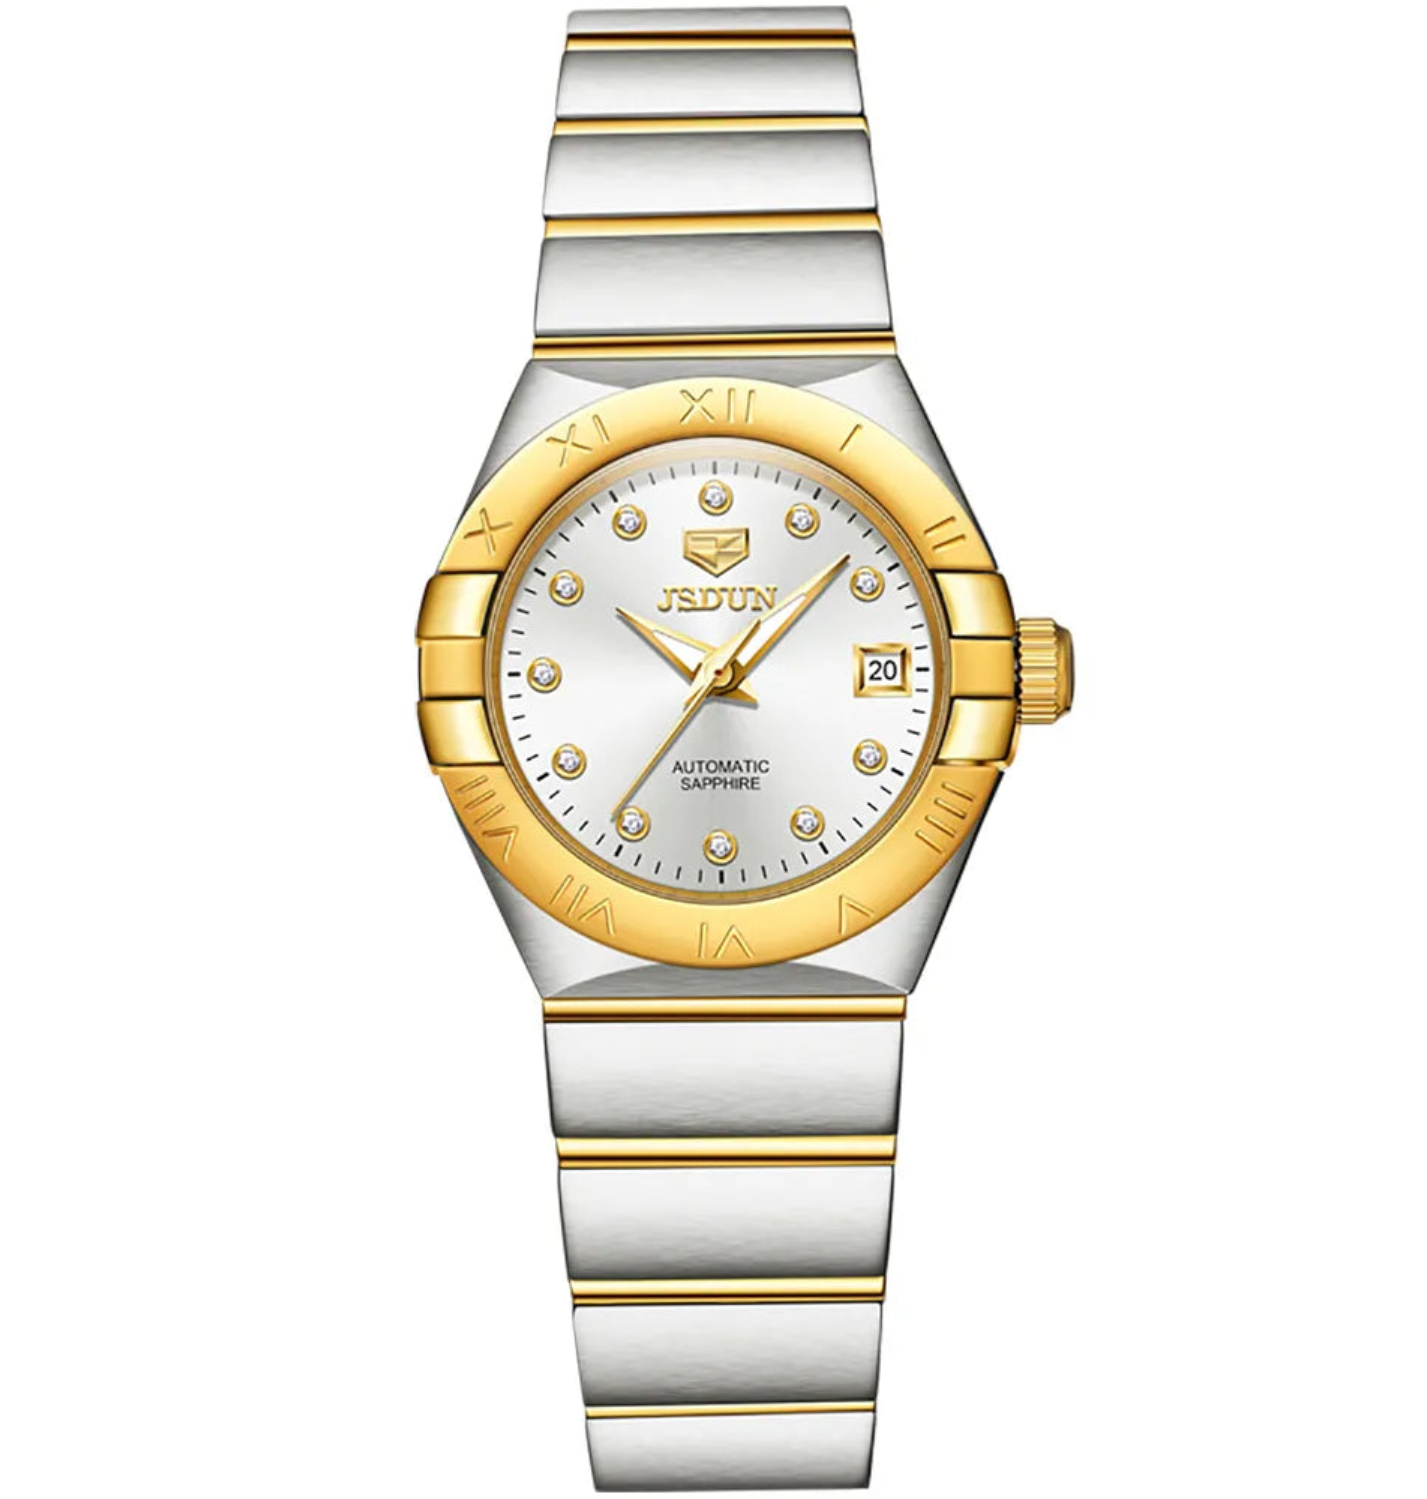 Jsdun Automatic Watch Luxury Sapphire Mirror Waterproof Ladies Wristwatch